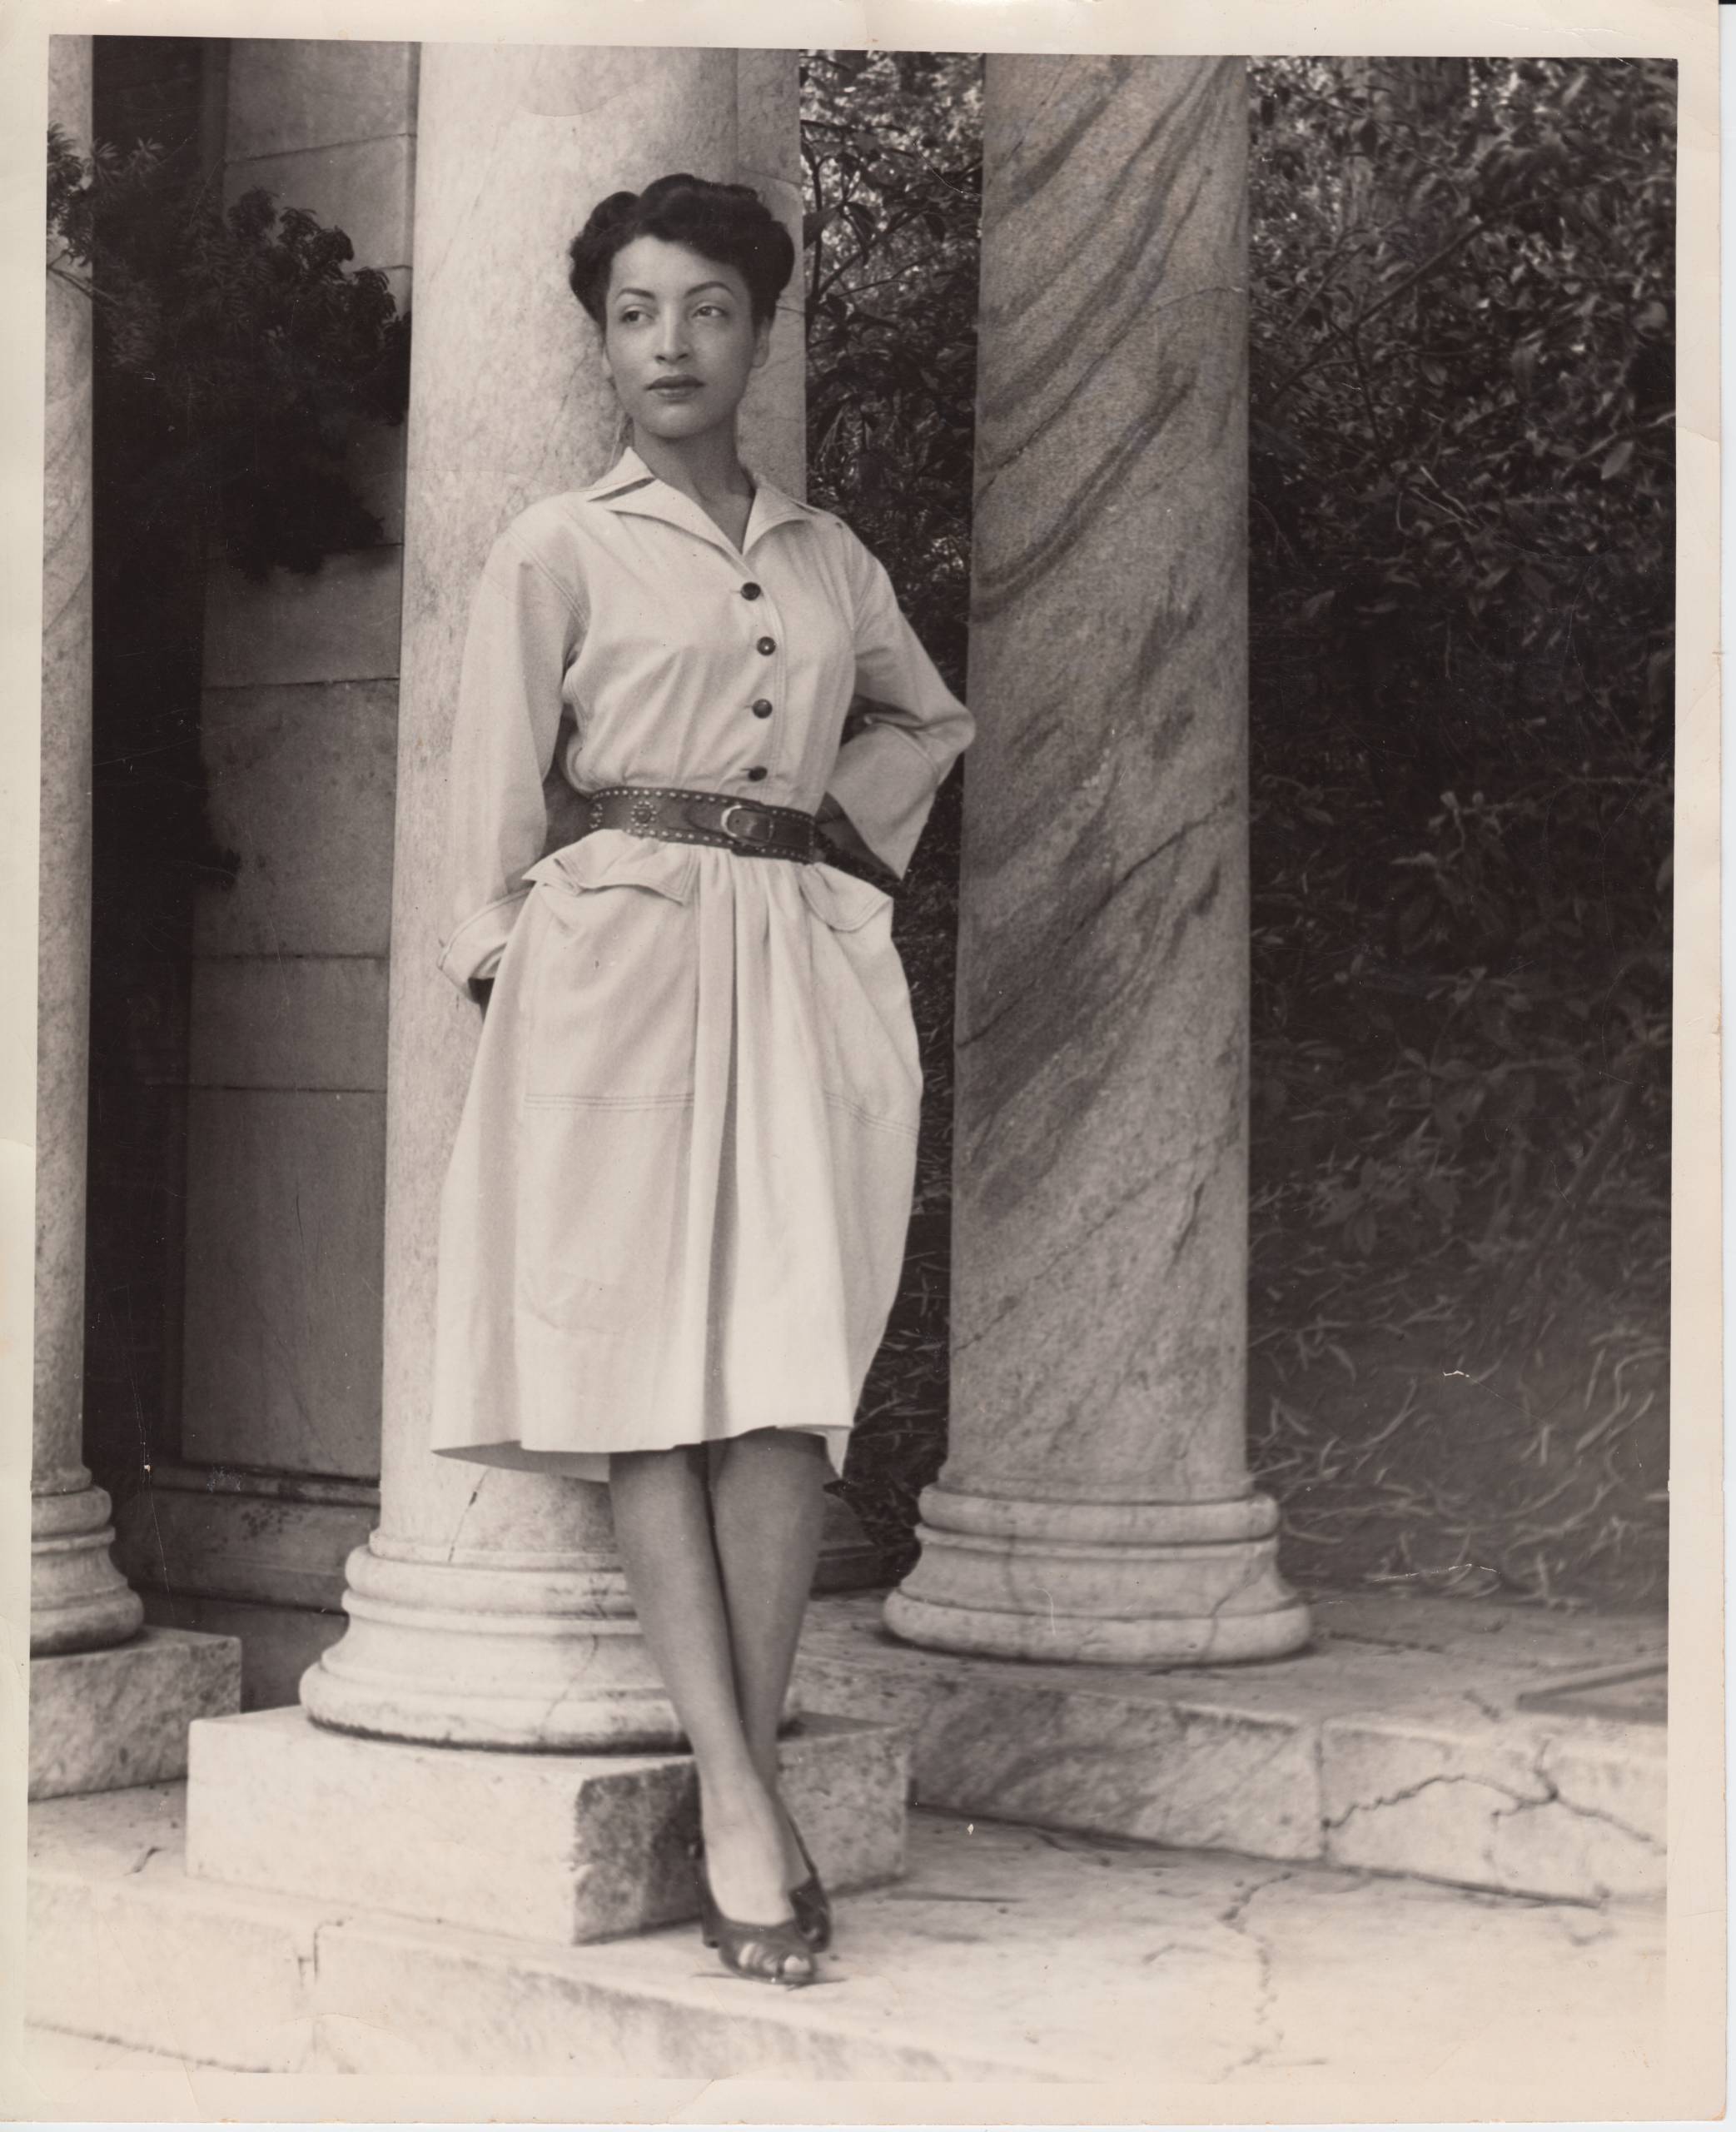 Betty Reid Soskin posing for a photo in the 1940s at Lake Merritt in Oakland.